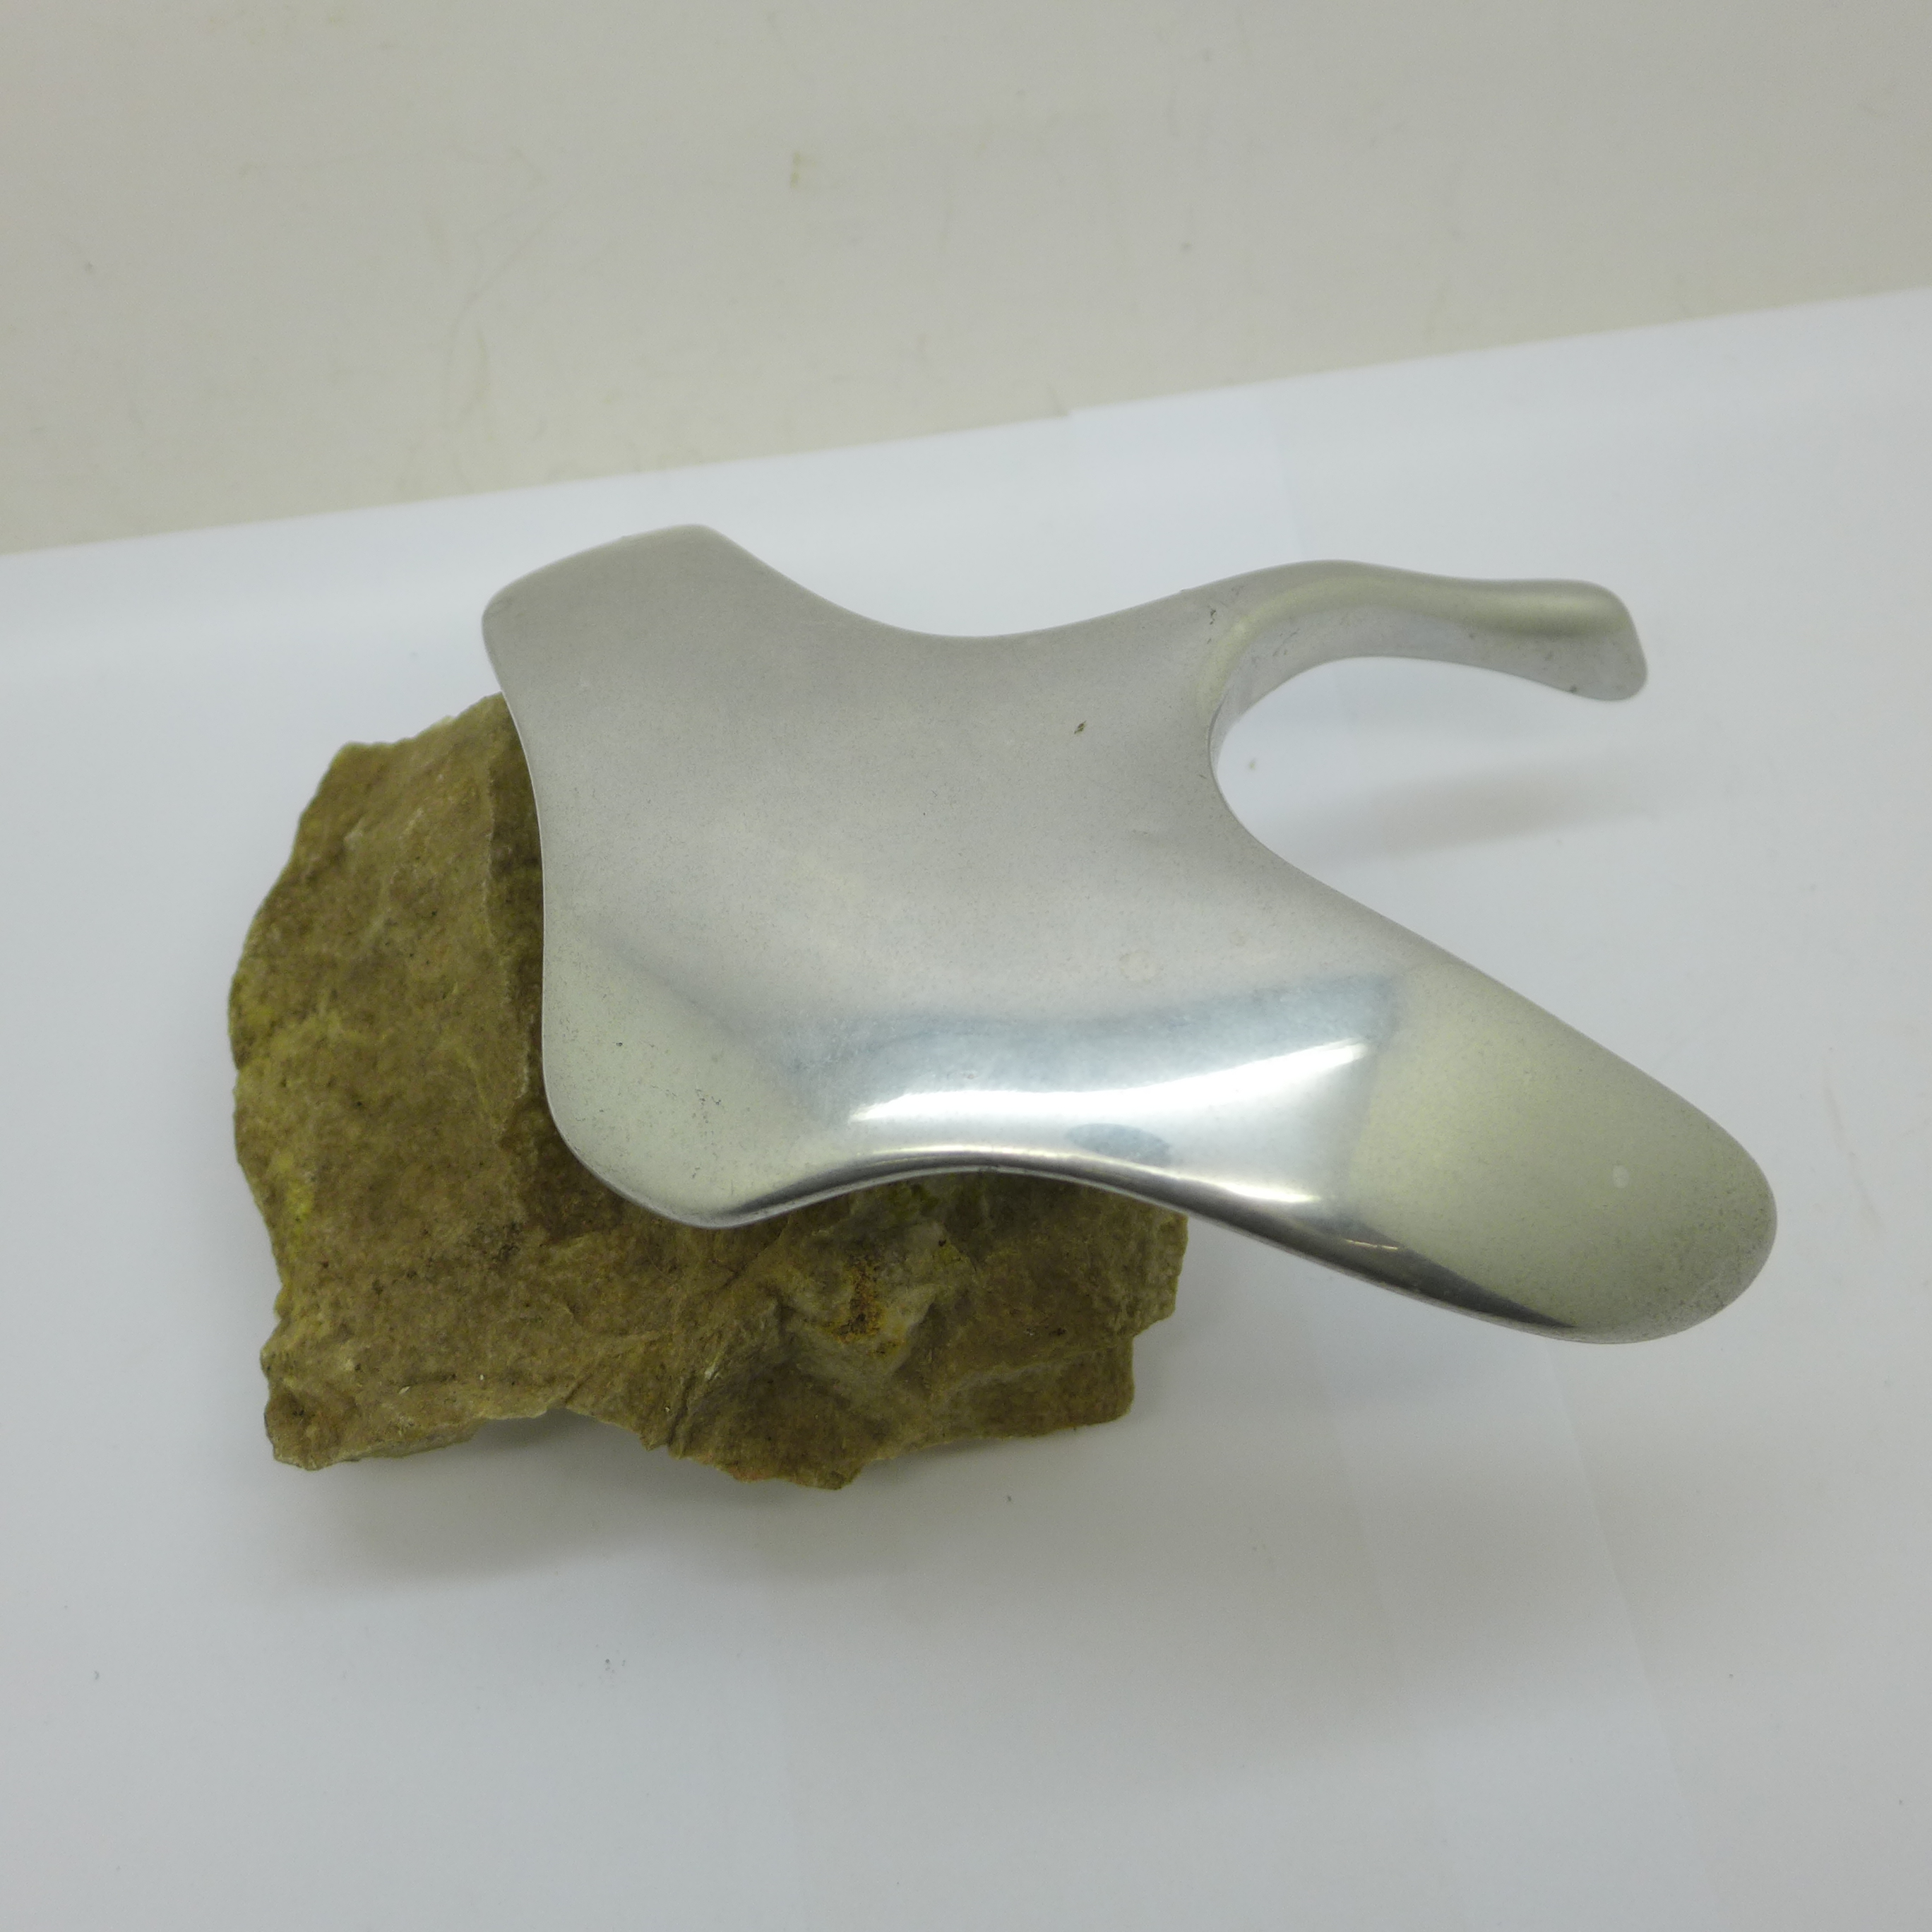 A Manta Ray car mascot mounted on a stone - Image 2 of 3